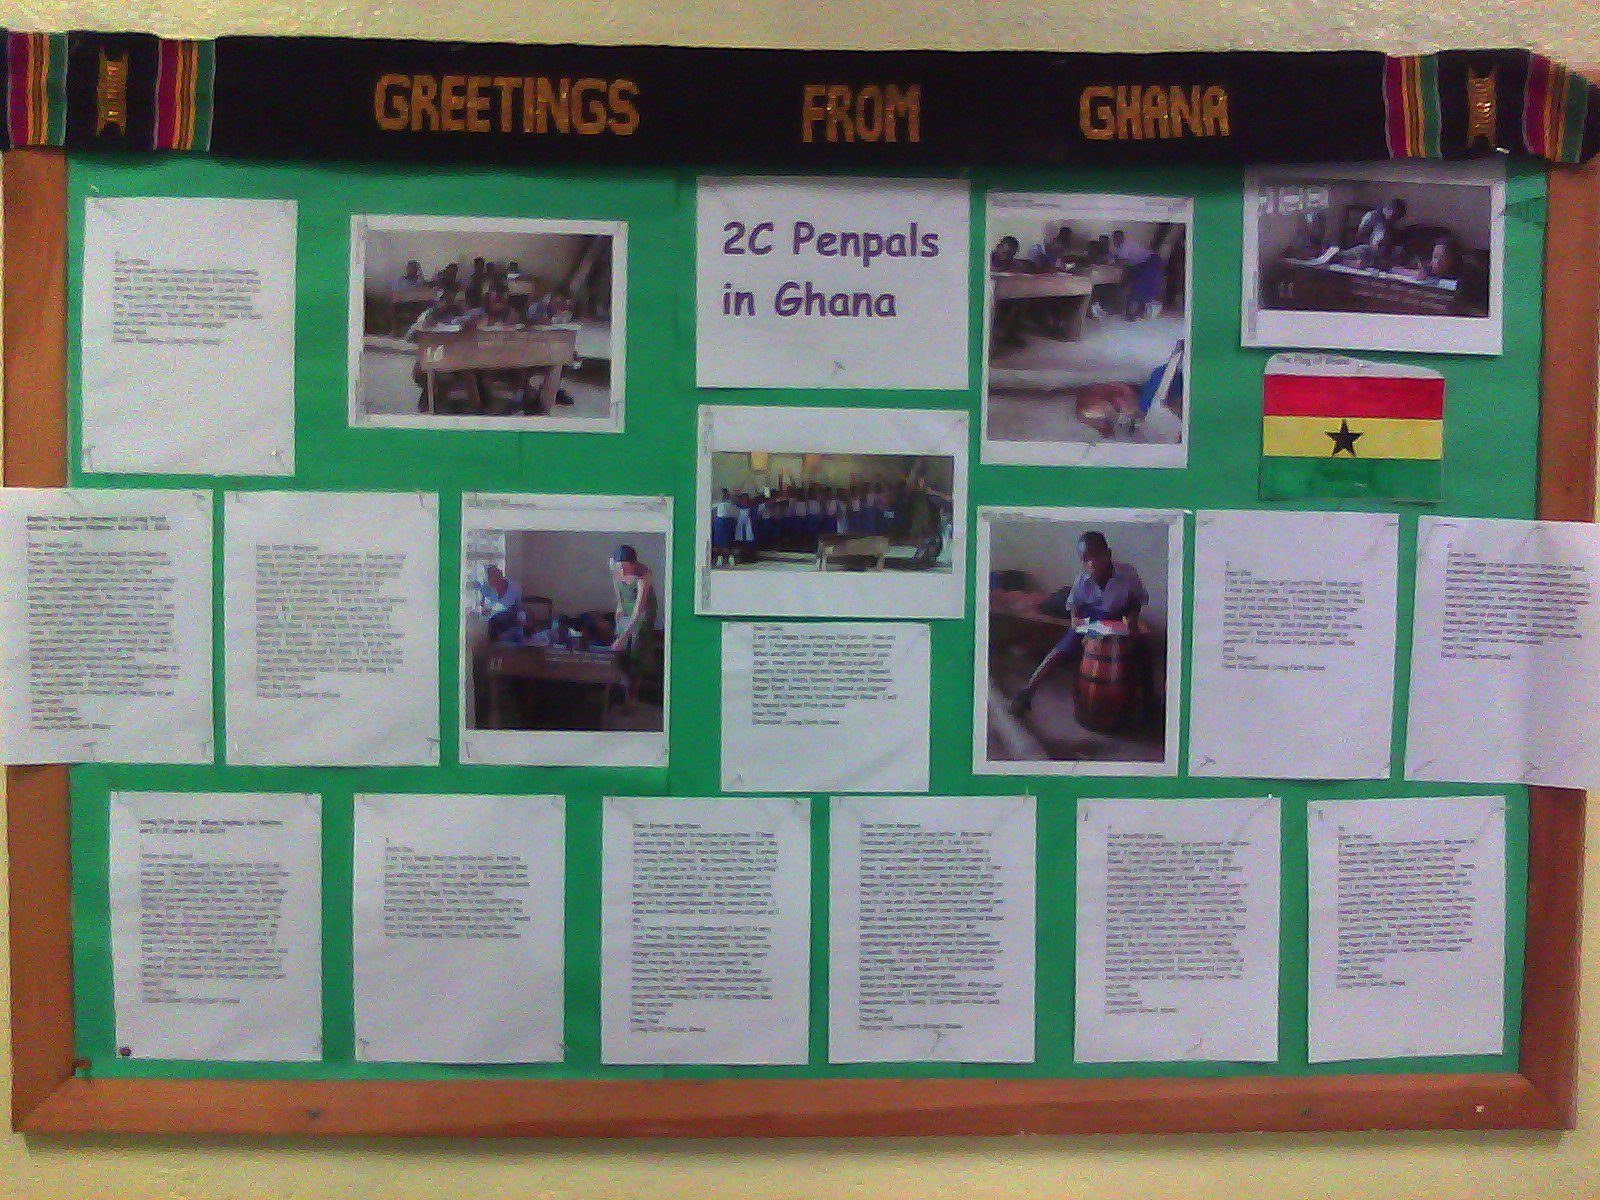 A poster from Newton, Massachusetts about their Ghana penpals!